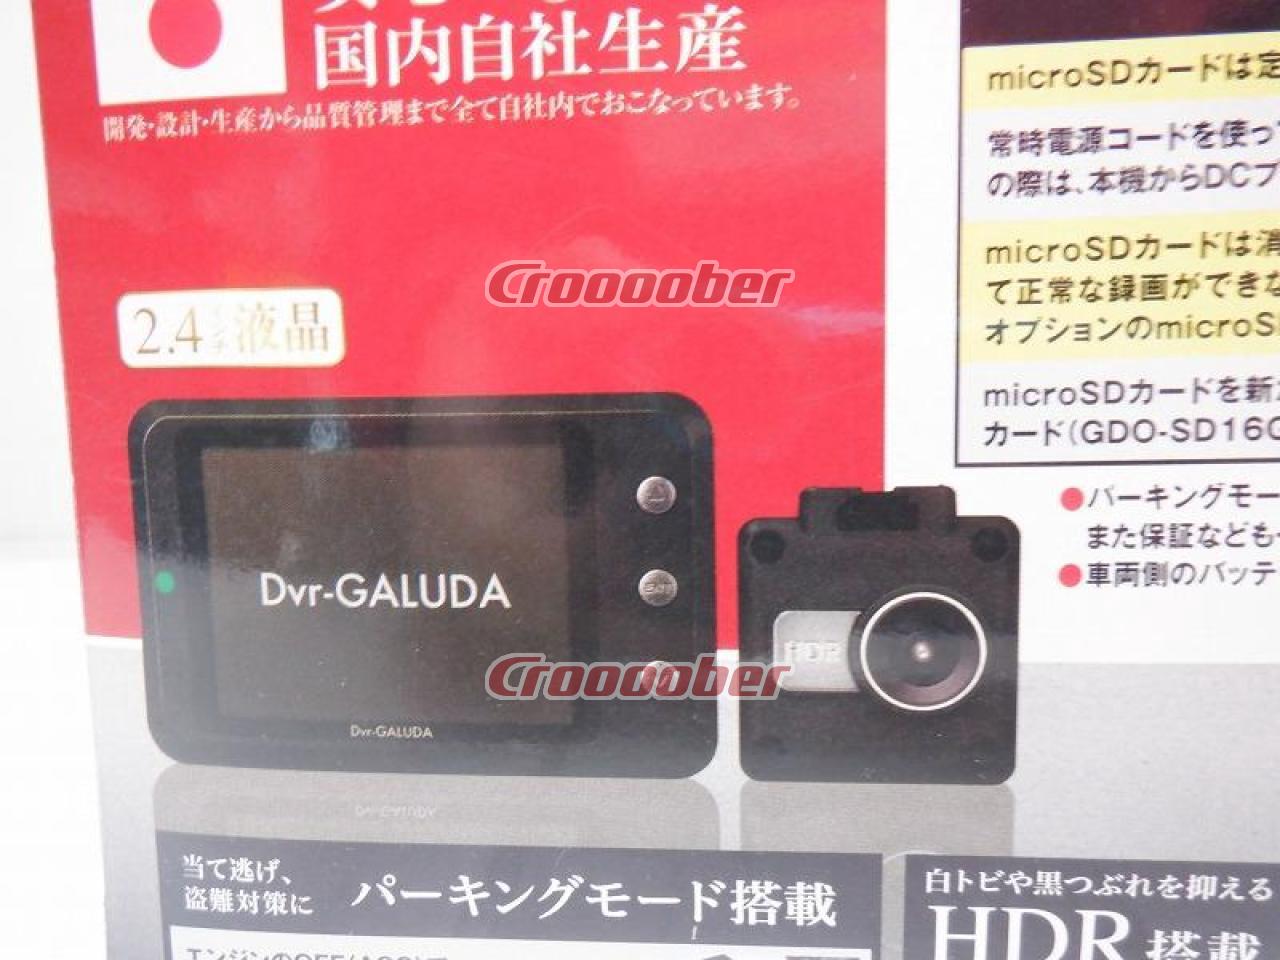 CELLSTAR(セルスター) Dvr-GALUDA GAL-01SP | カーAVアクセサリー ドライブレコーダーパーツの通販なら |  Croooober(クルーバー)